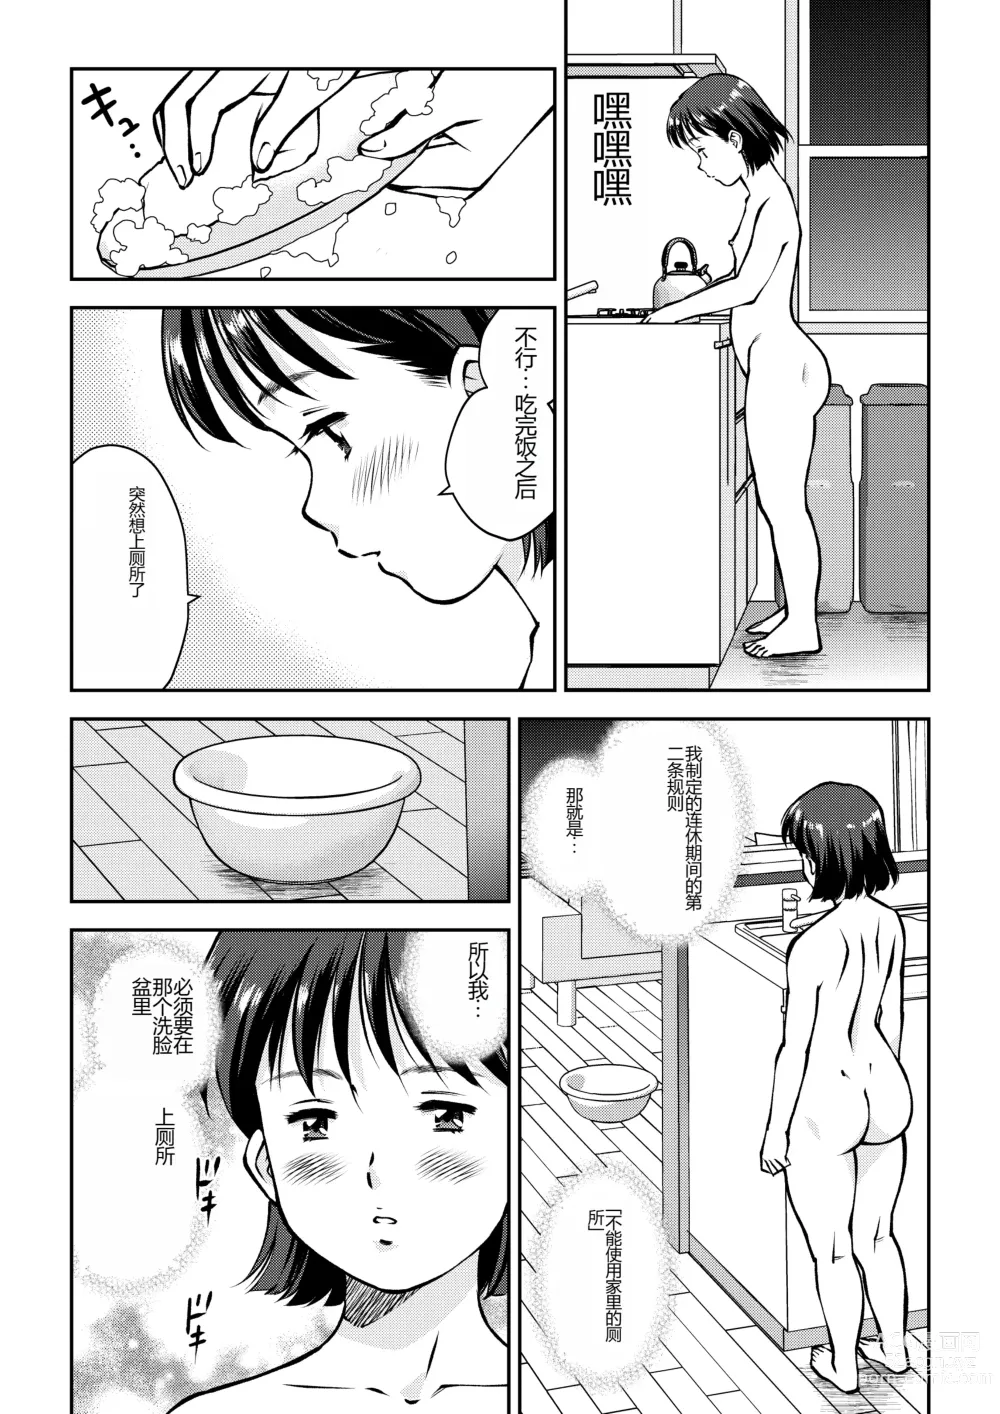 Page 9 of manga Unko Mamire de Orusuban